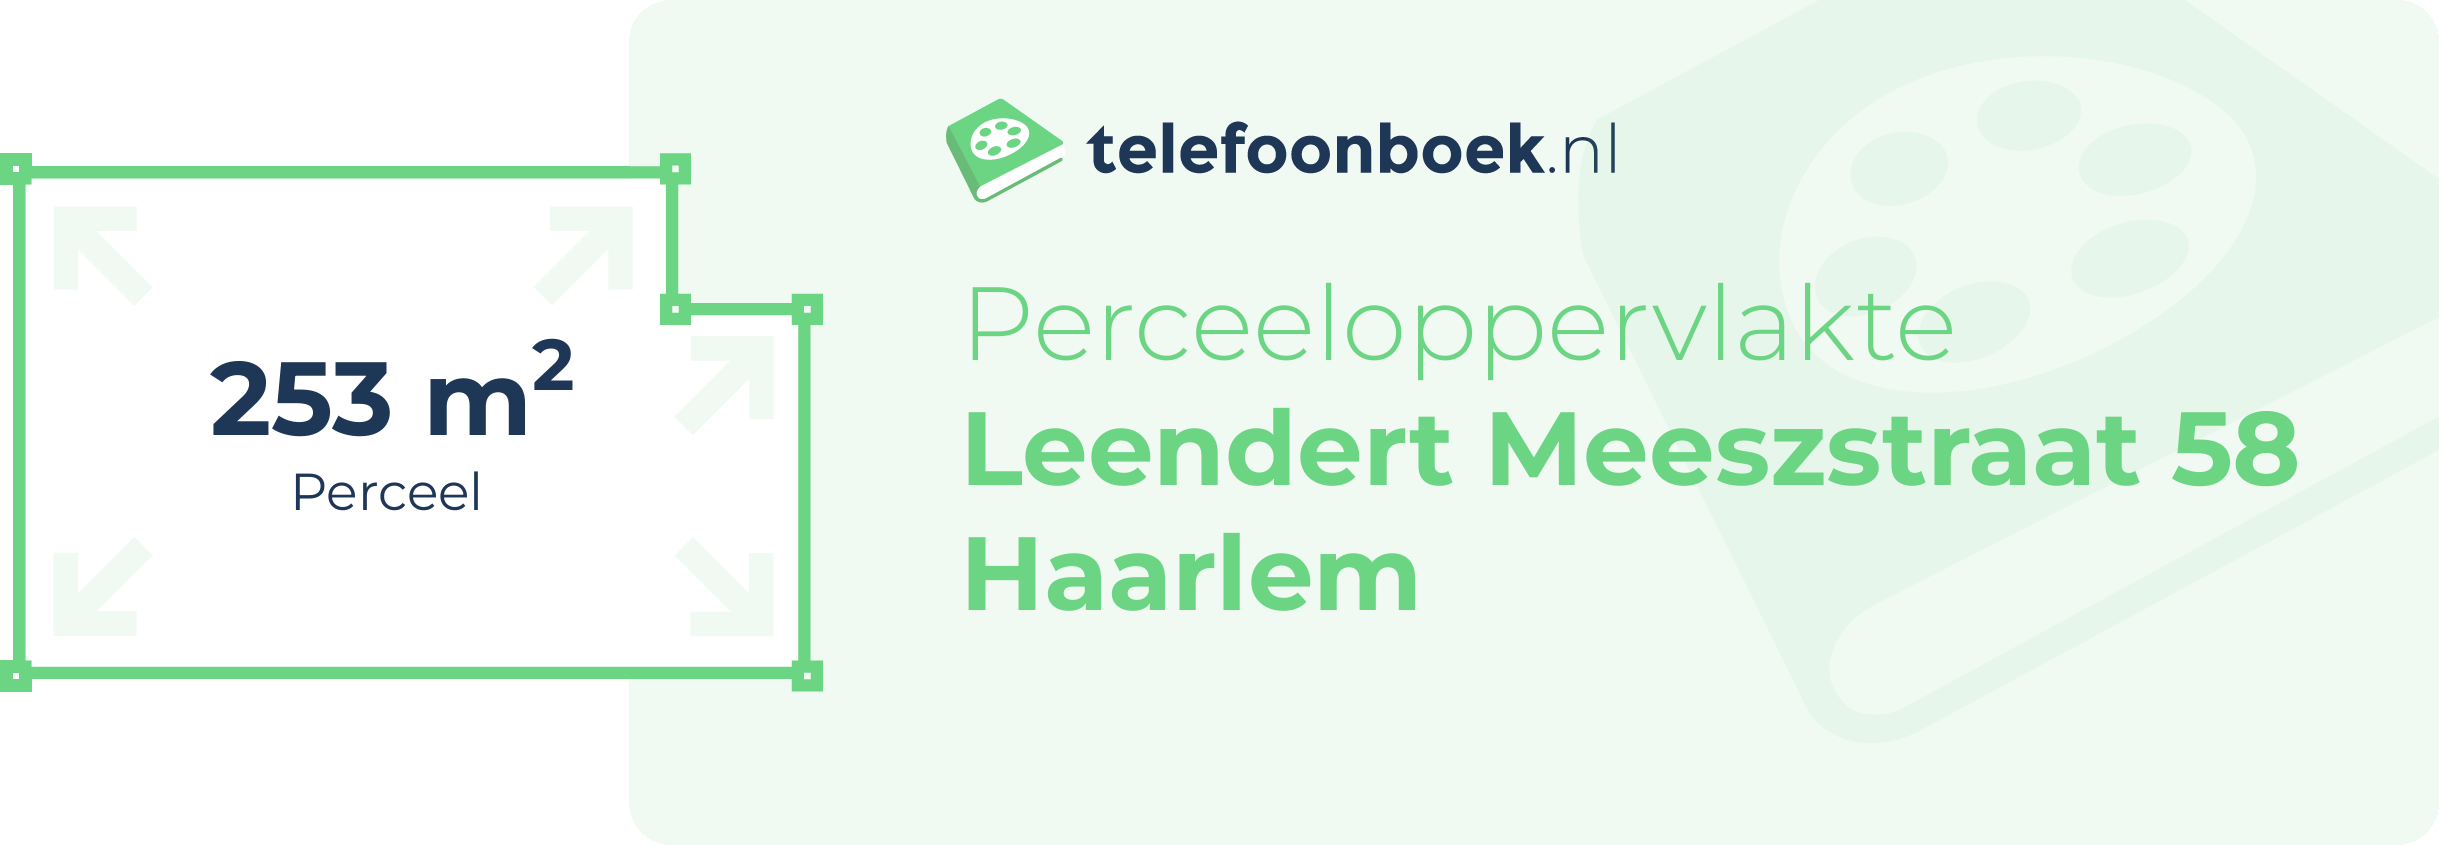 Perceeloppervlakte Leendert Meeszstraat 58 Haarlem